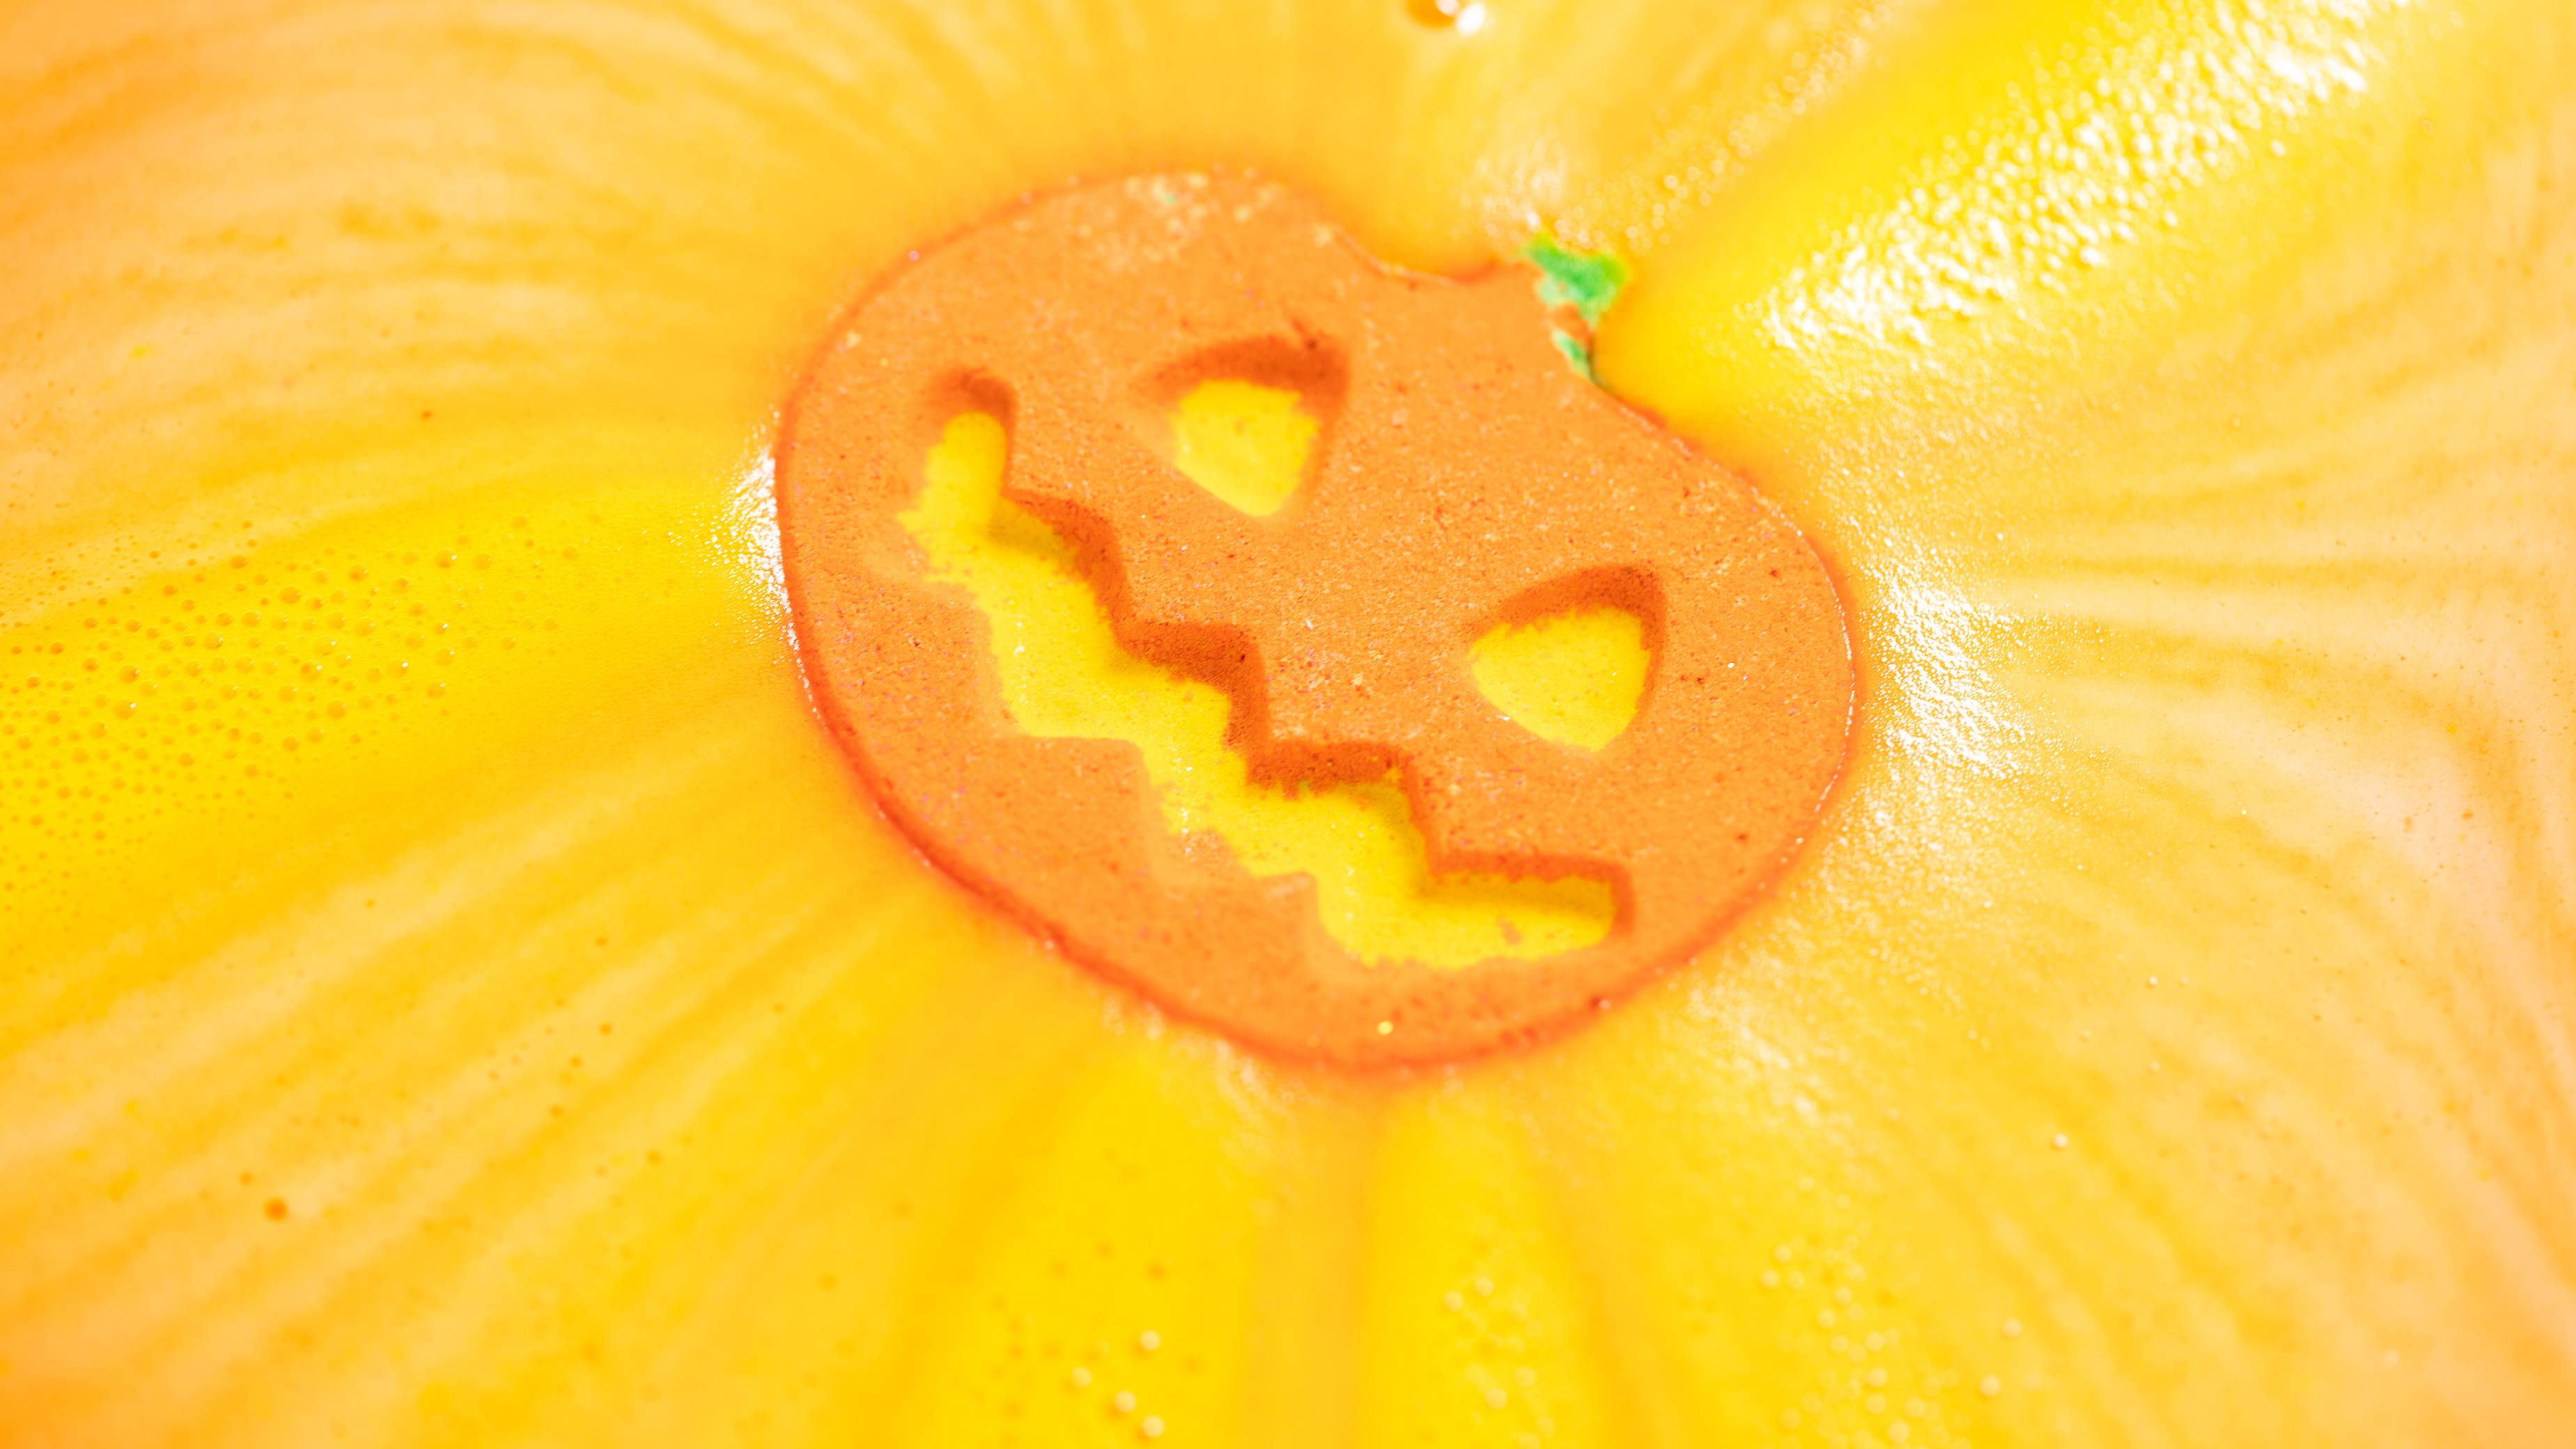 The Punkin Pumpkin bath bomb fizzes in water, releasing bright orange and yellow foam across the surface.